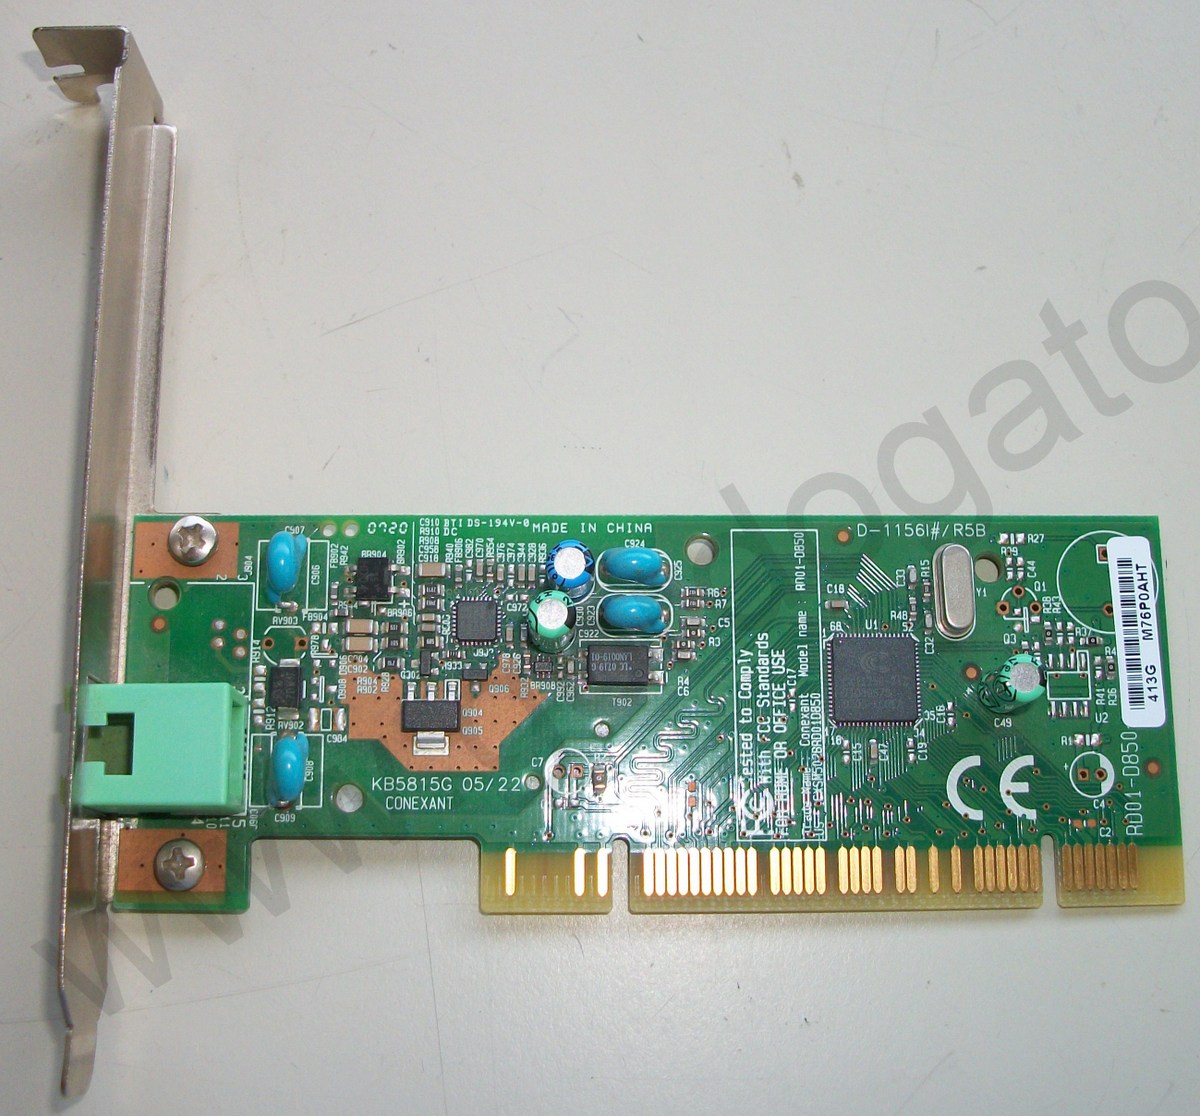 Inbuild CX11256 Conexant Internal PCI Modem From HP